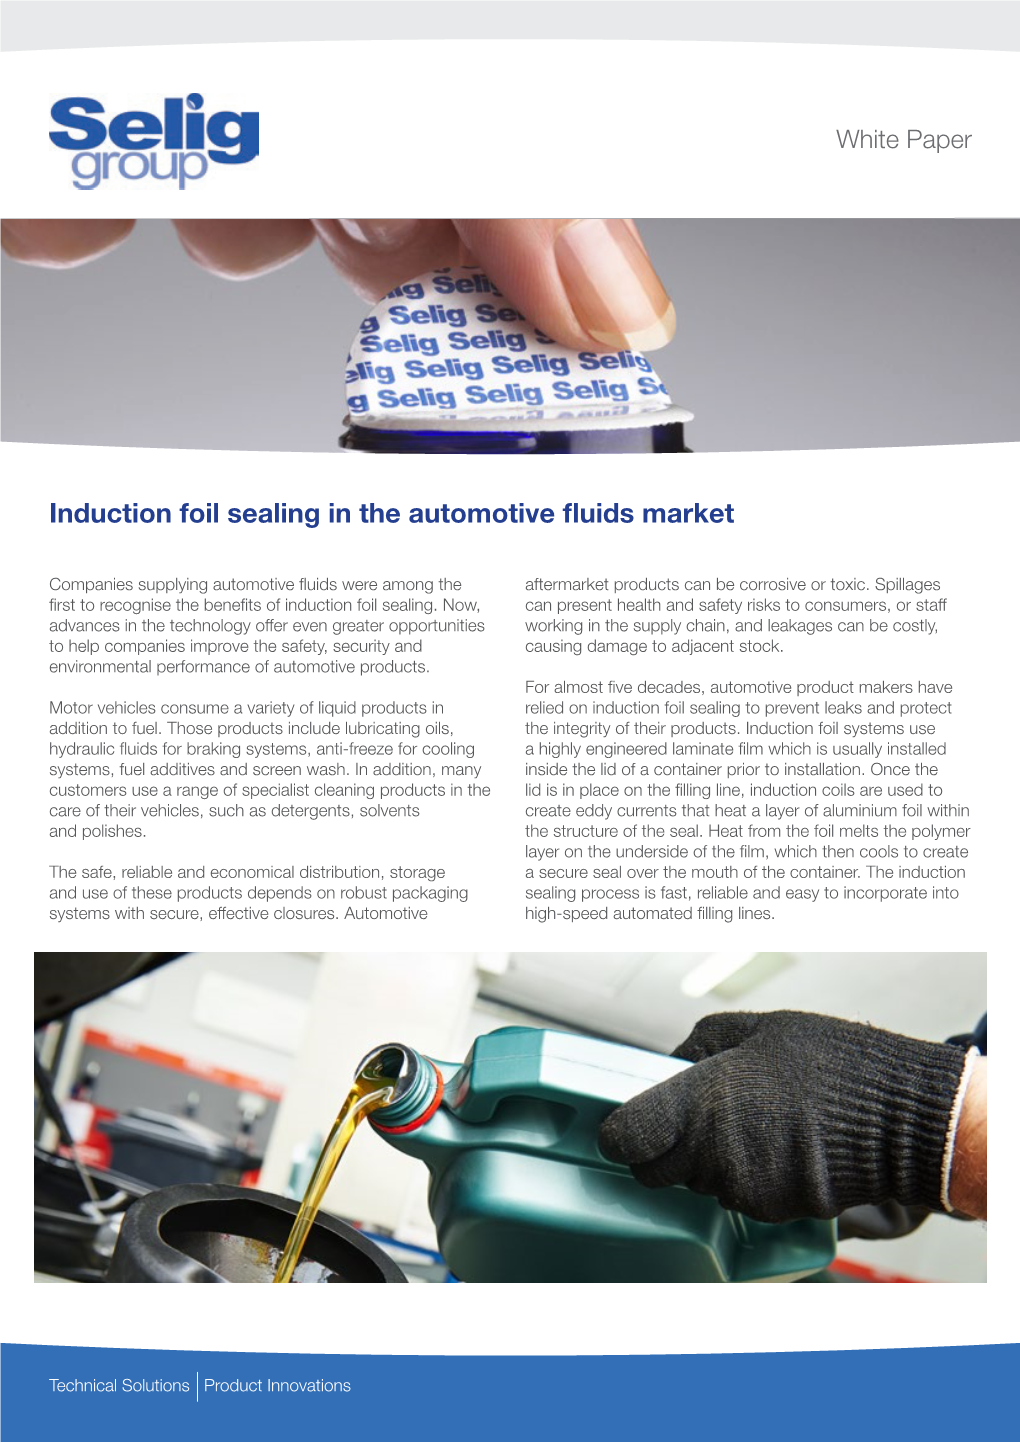 Induction Foil Sealing in the Automotive Fluids Market